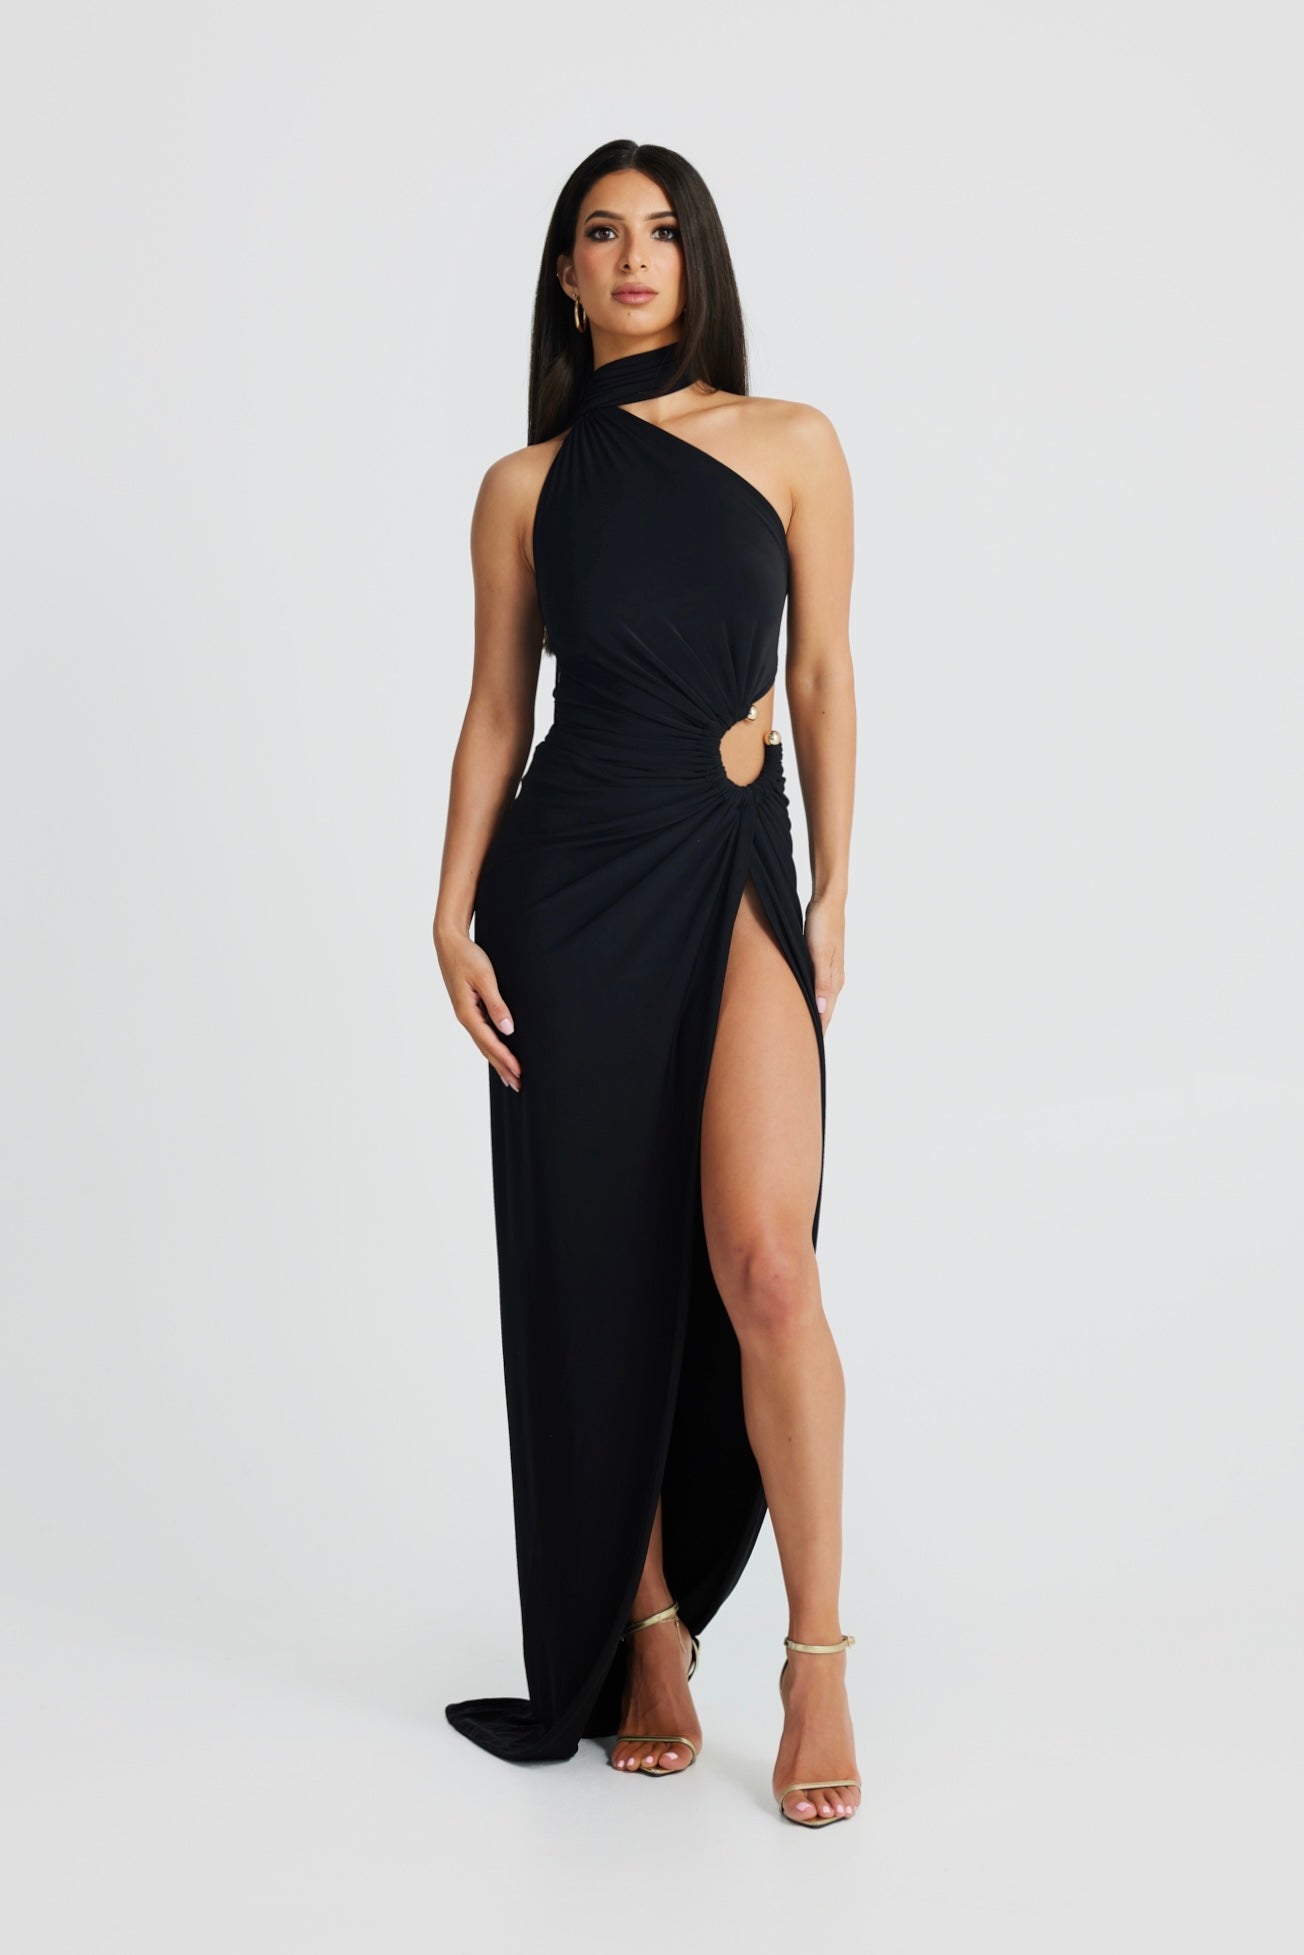 MÉLANI The Label BIANKA Black Cut Out Leg Split Form Fitted Dress